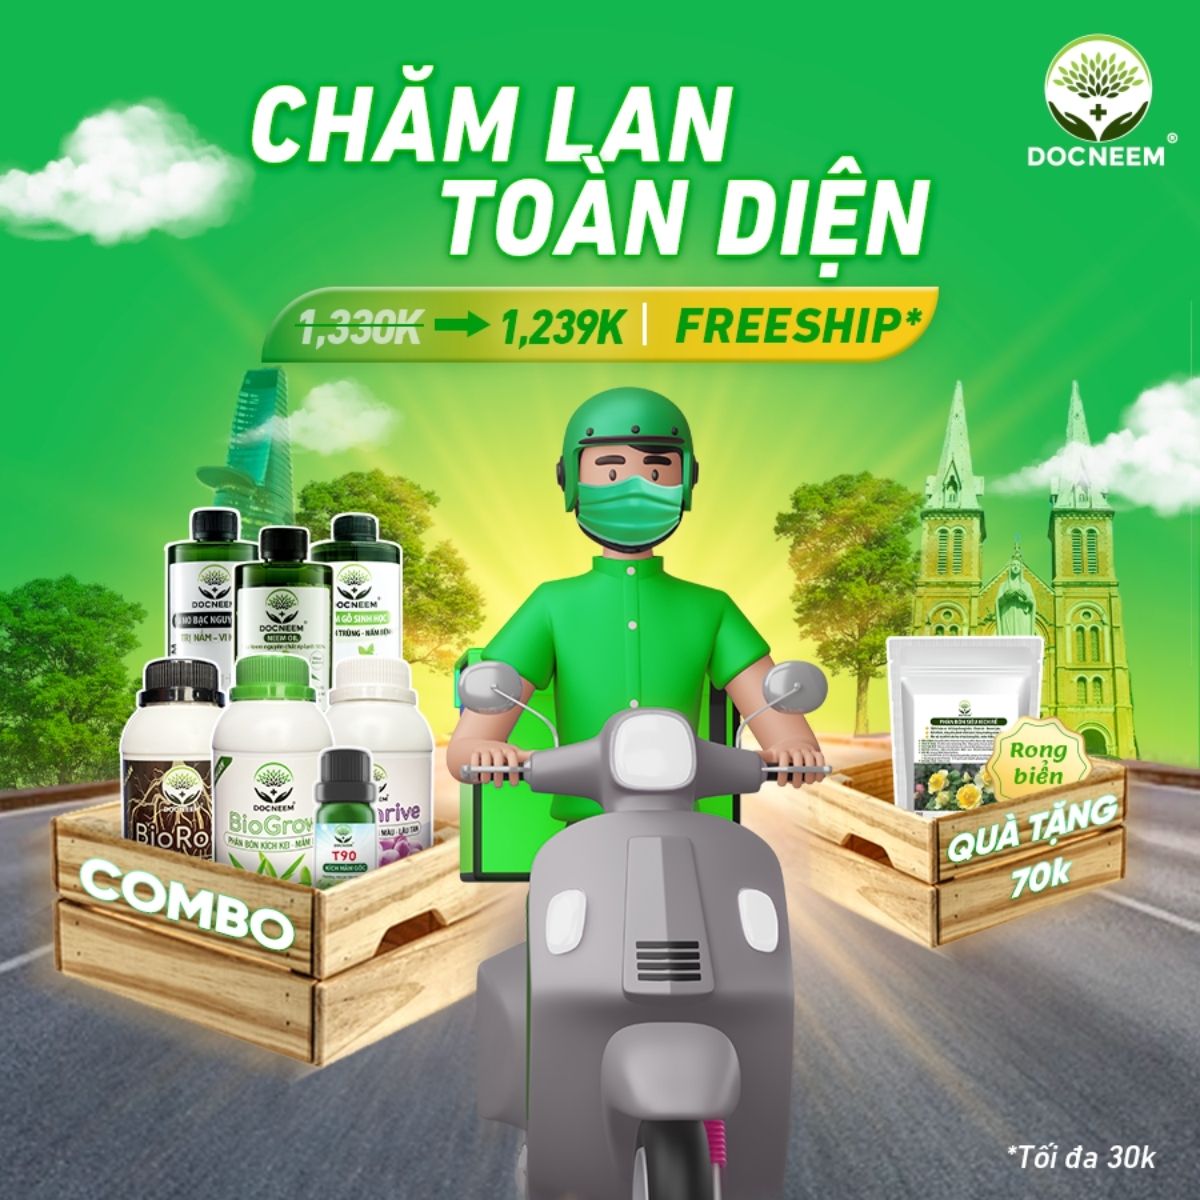 6-combo cham lan toan dien